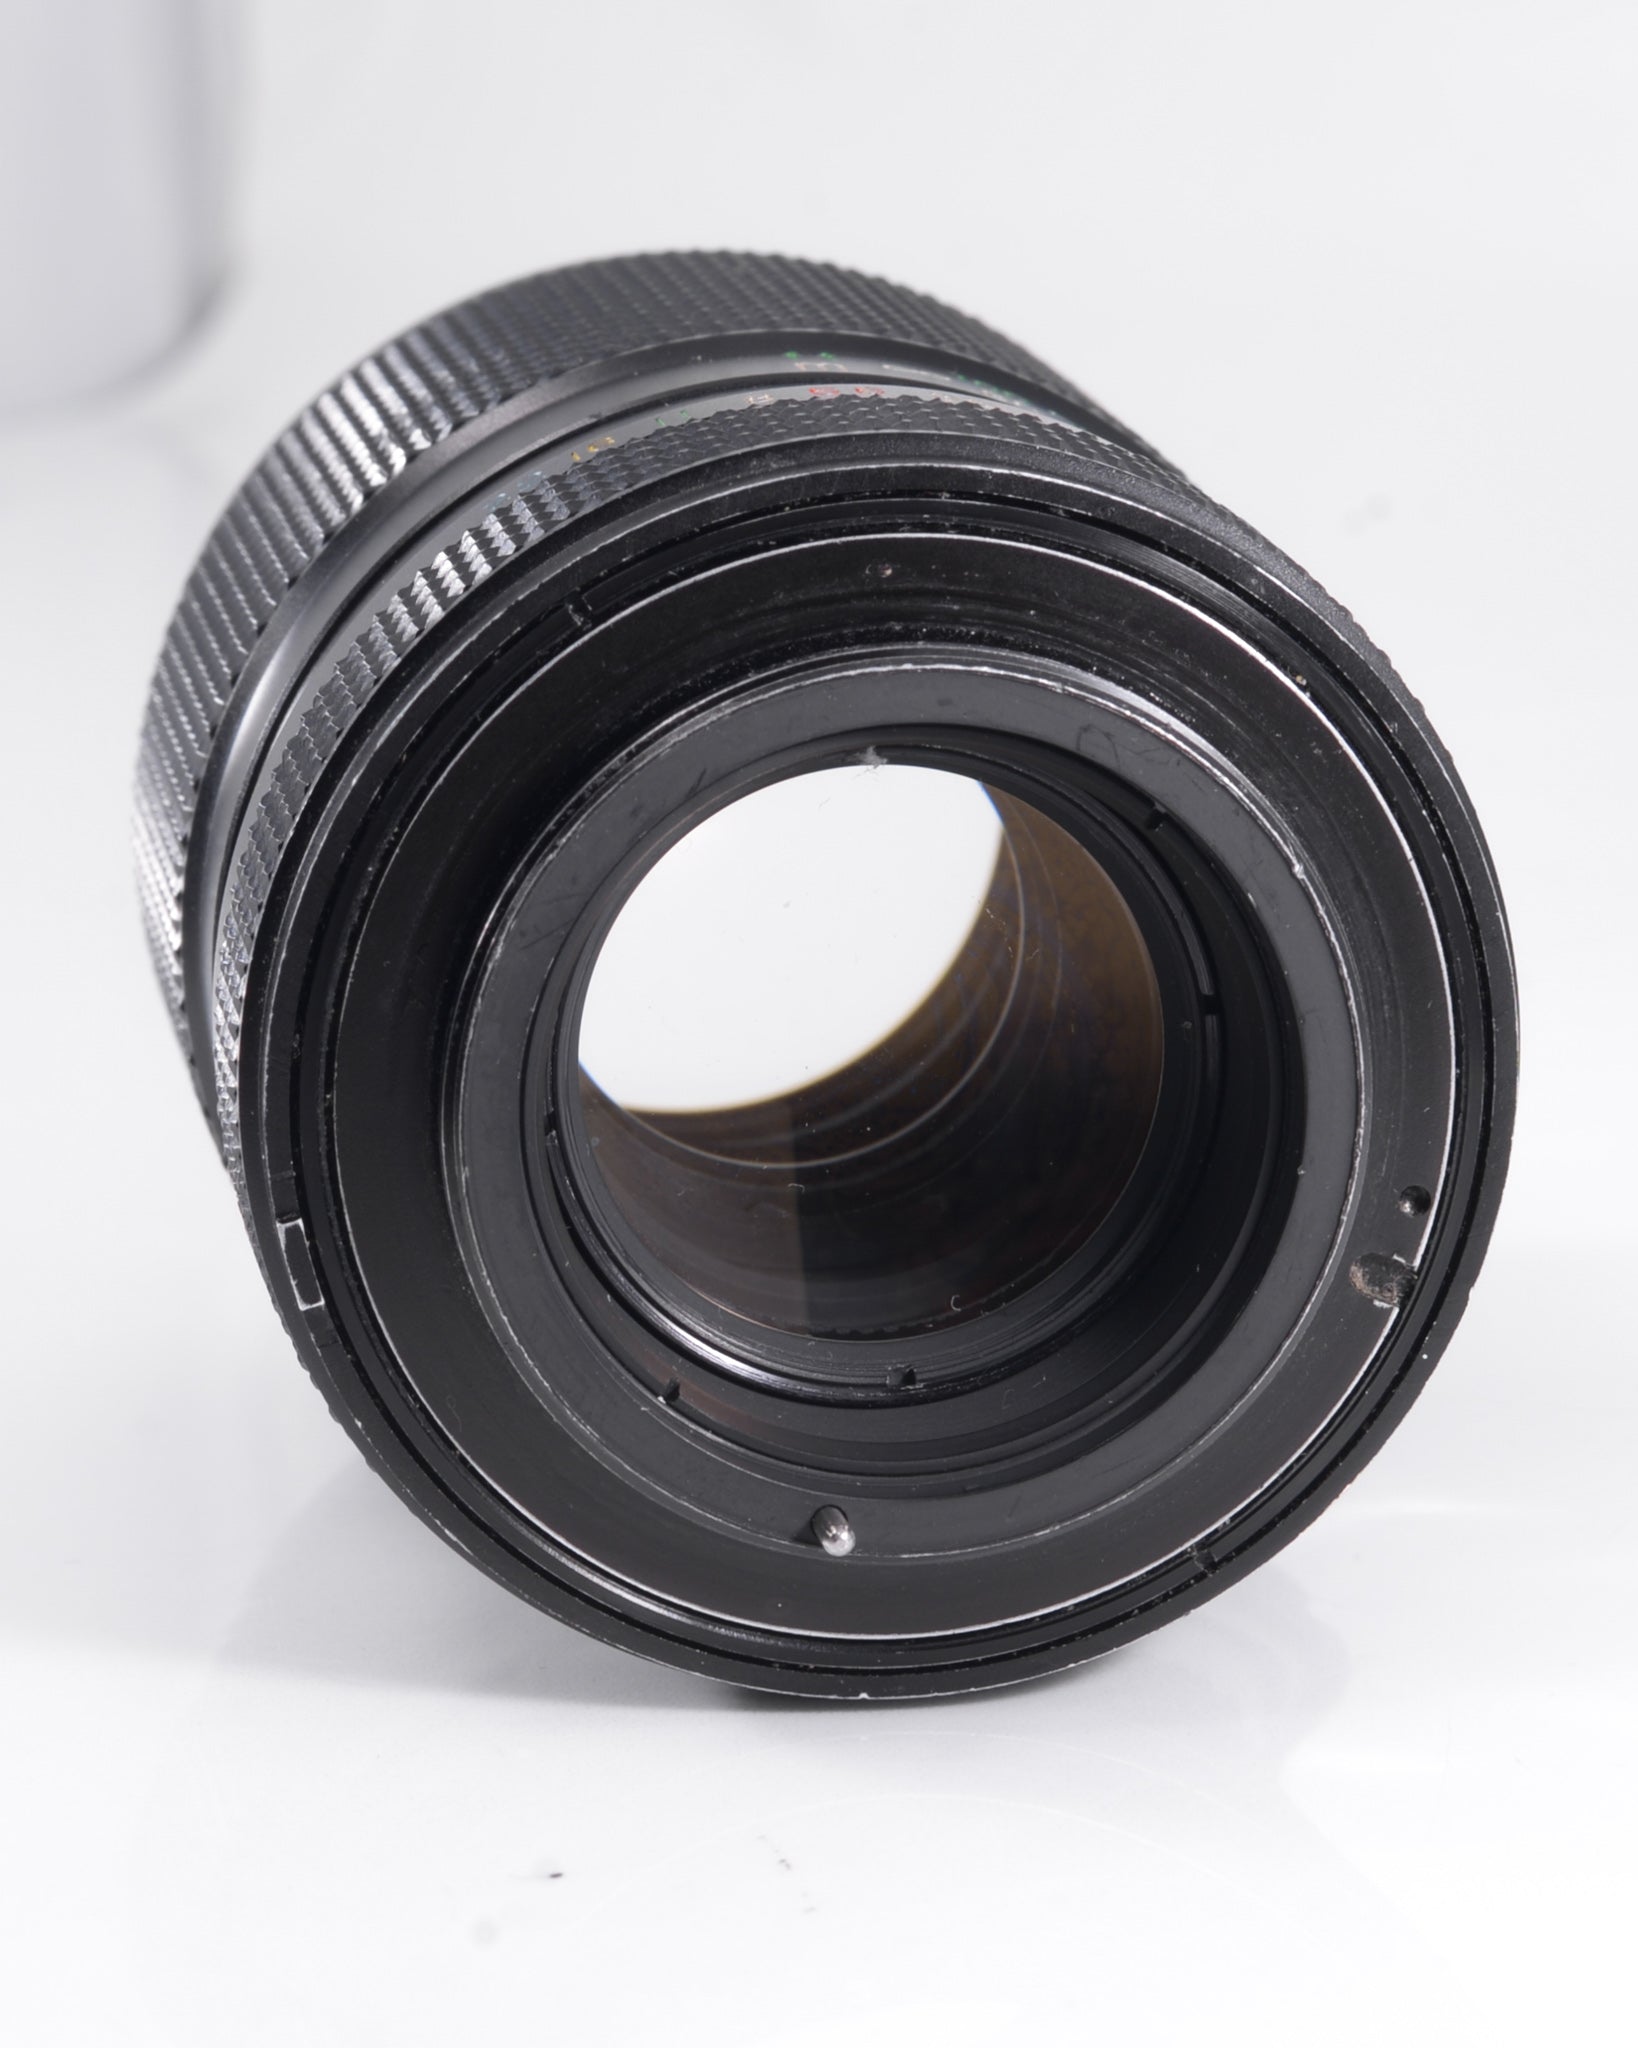 EBC Fujinon T 135mm f3.5 M42 lens